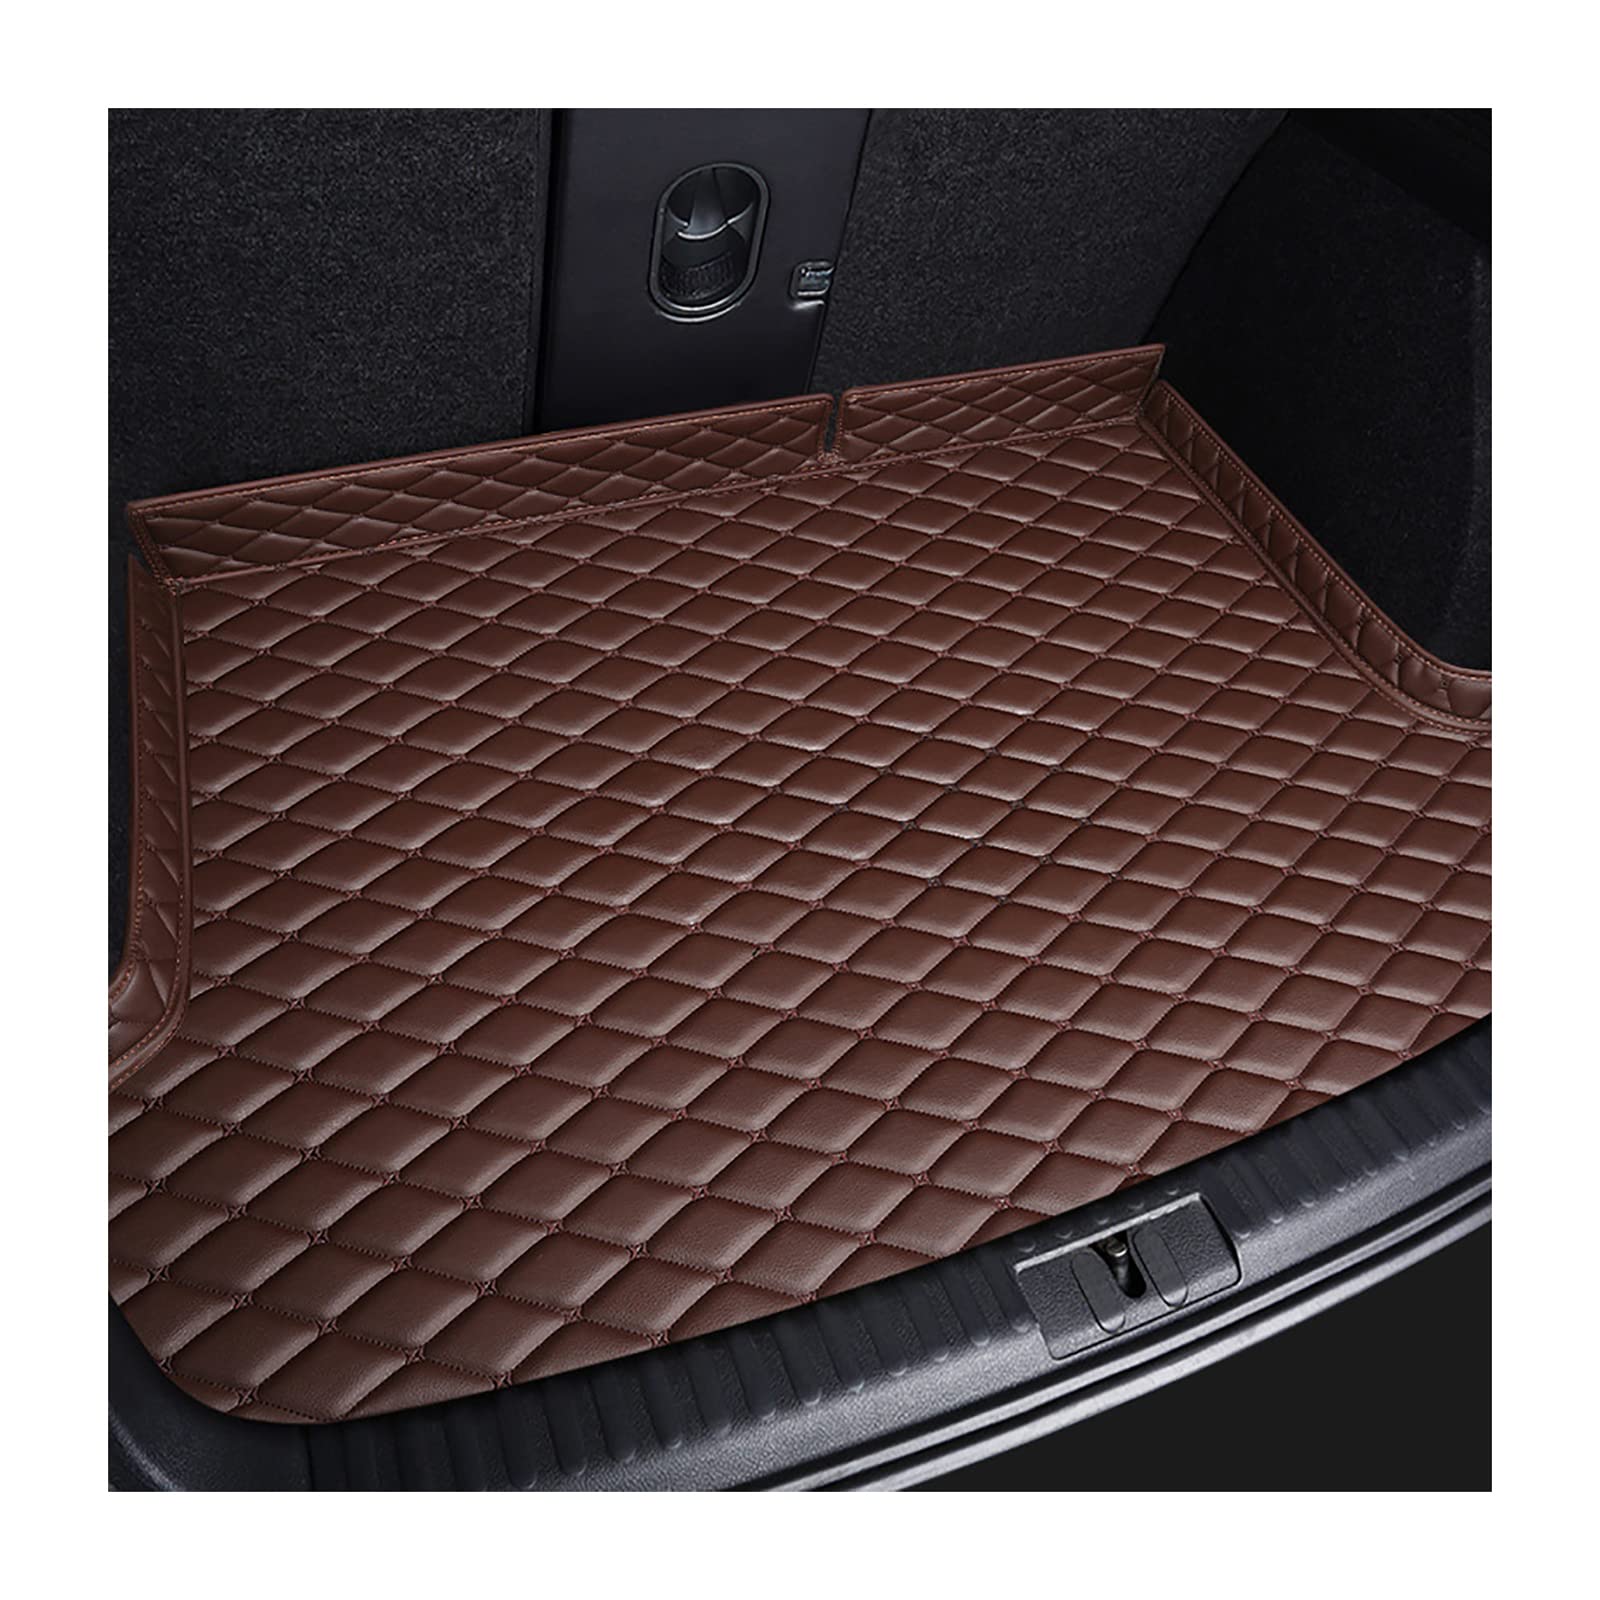 Car Boot Protection Mat mit Erhöhtem Rand, Kompatibel mit KIA Venga 2009-2018, Boot Protector Boot Mat Accessories,5-Coffee von YPGHBHD